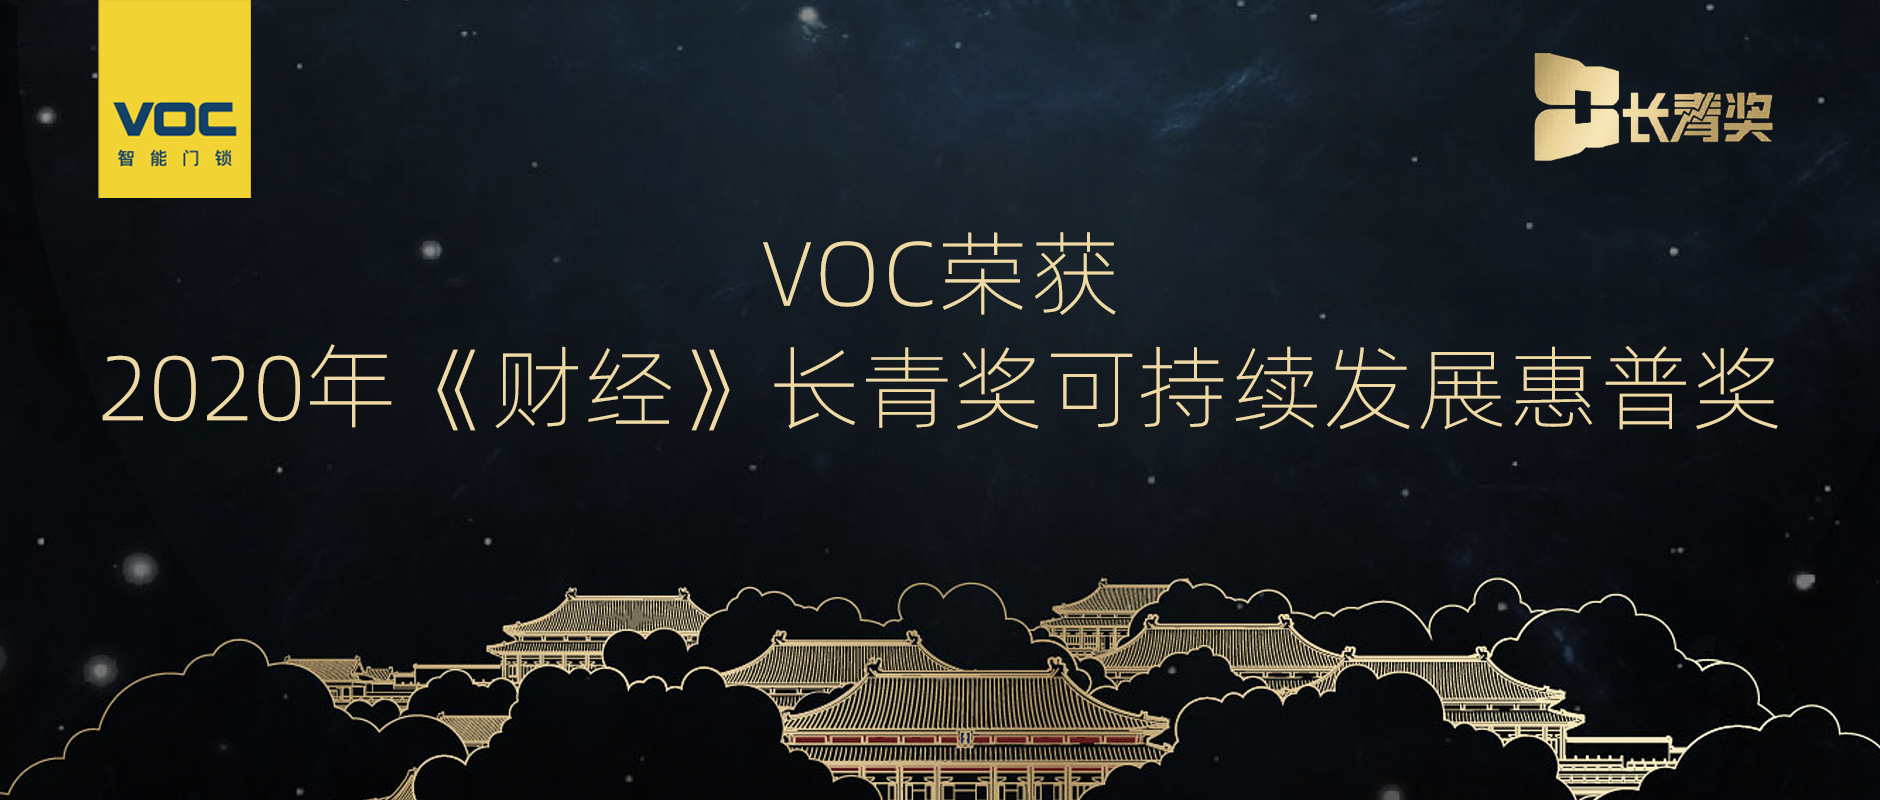 AIoT硬科技可持续发展获认可，VOC摘得2020《财经》长青奖“可持续发展普惠奖”